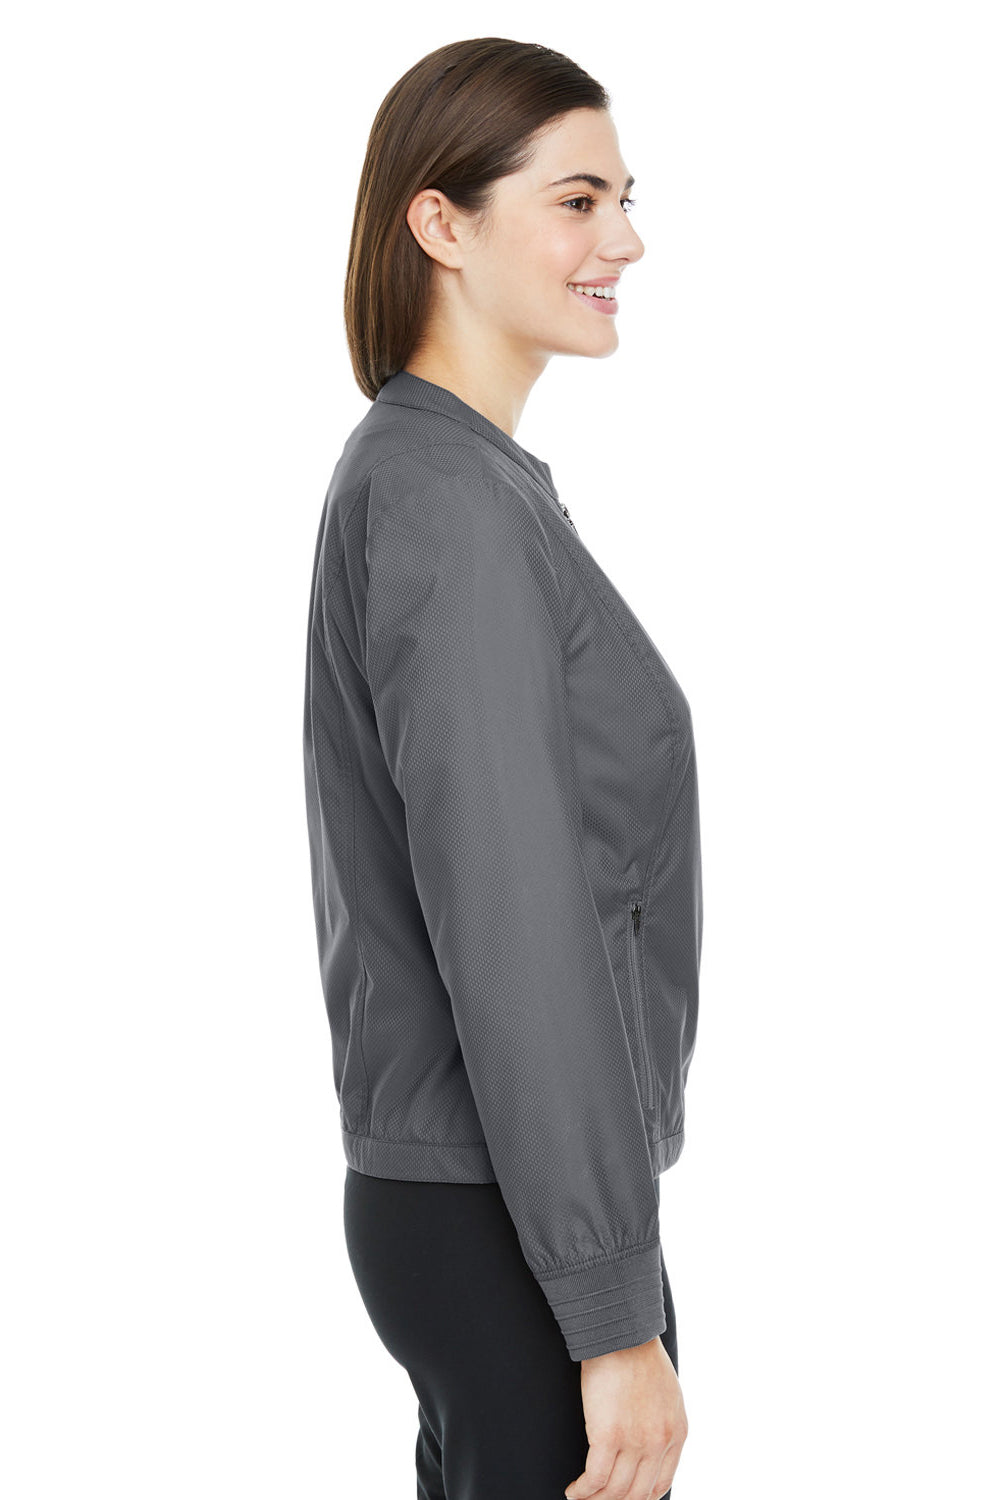 Devon & Jones DG700W Womens Vision Club Full Zip Jacket Graphite Grey Side